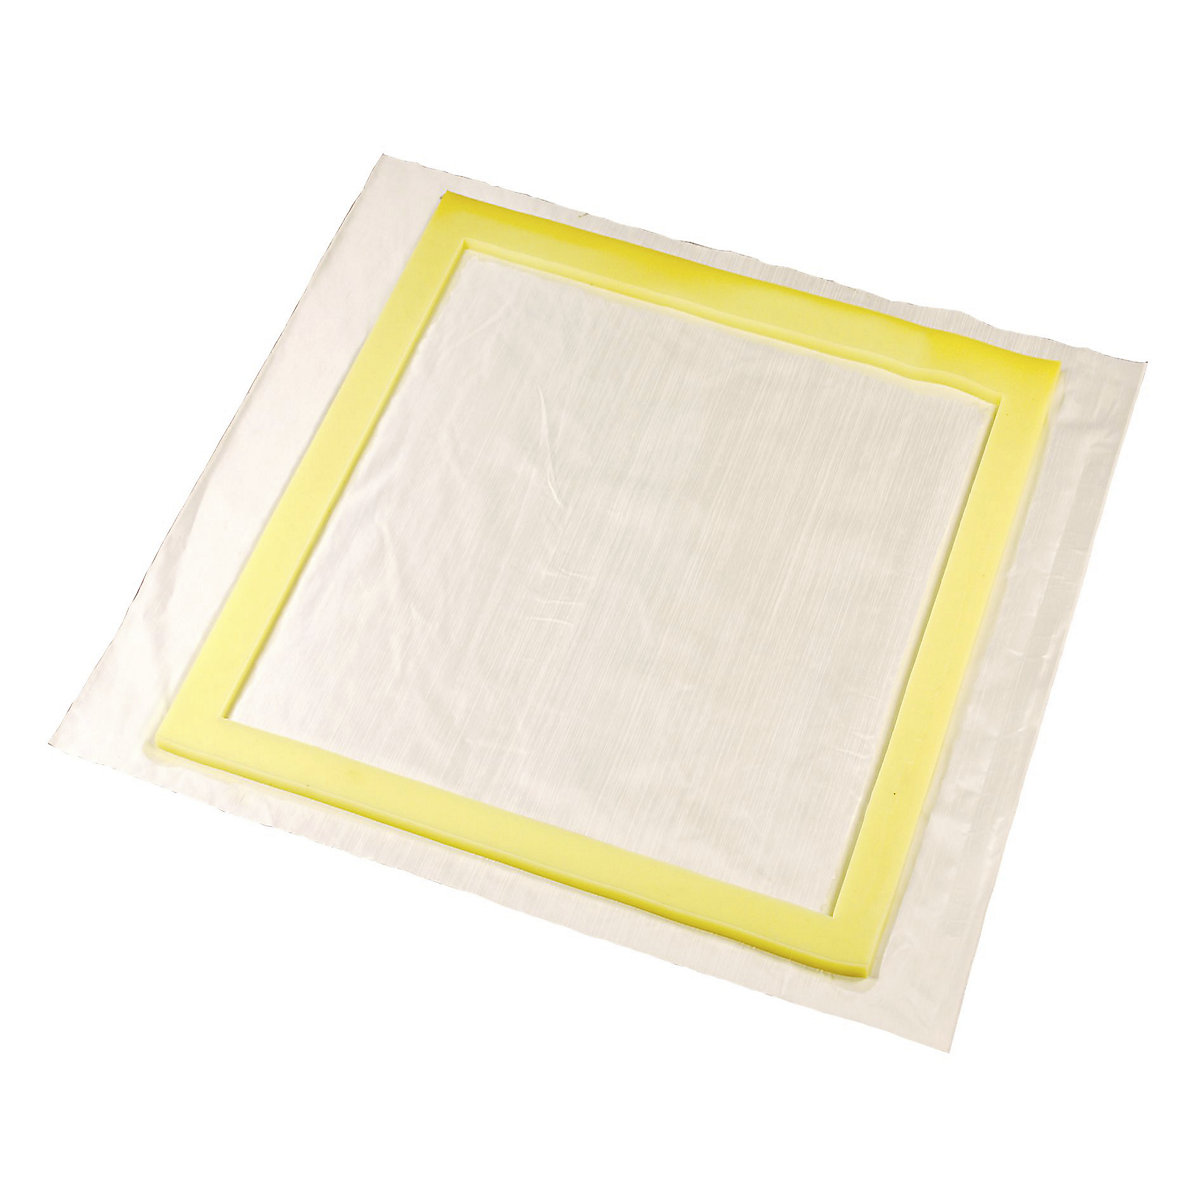 KOMPAKT sealing mat, reusable, LxWxH 1200 x 1200 x 13 mm-1